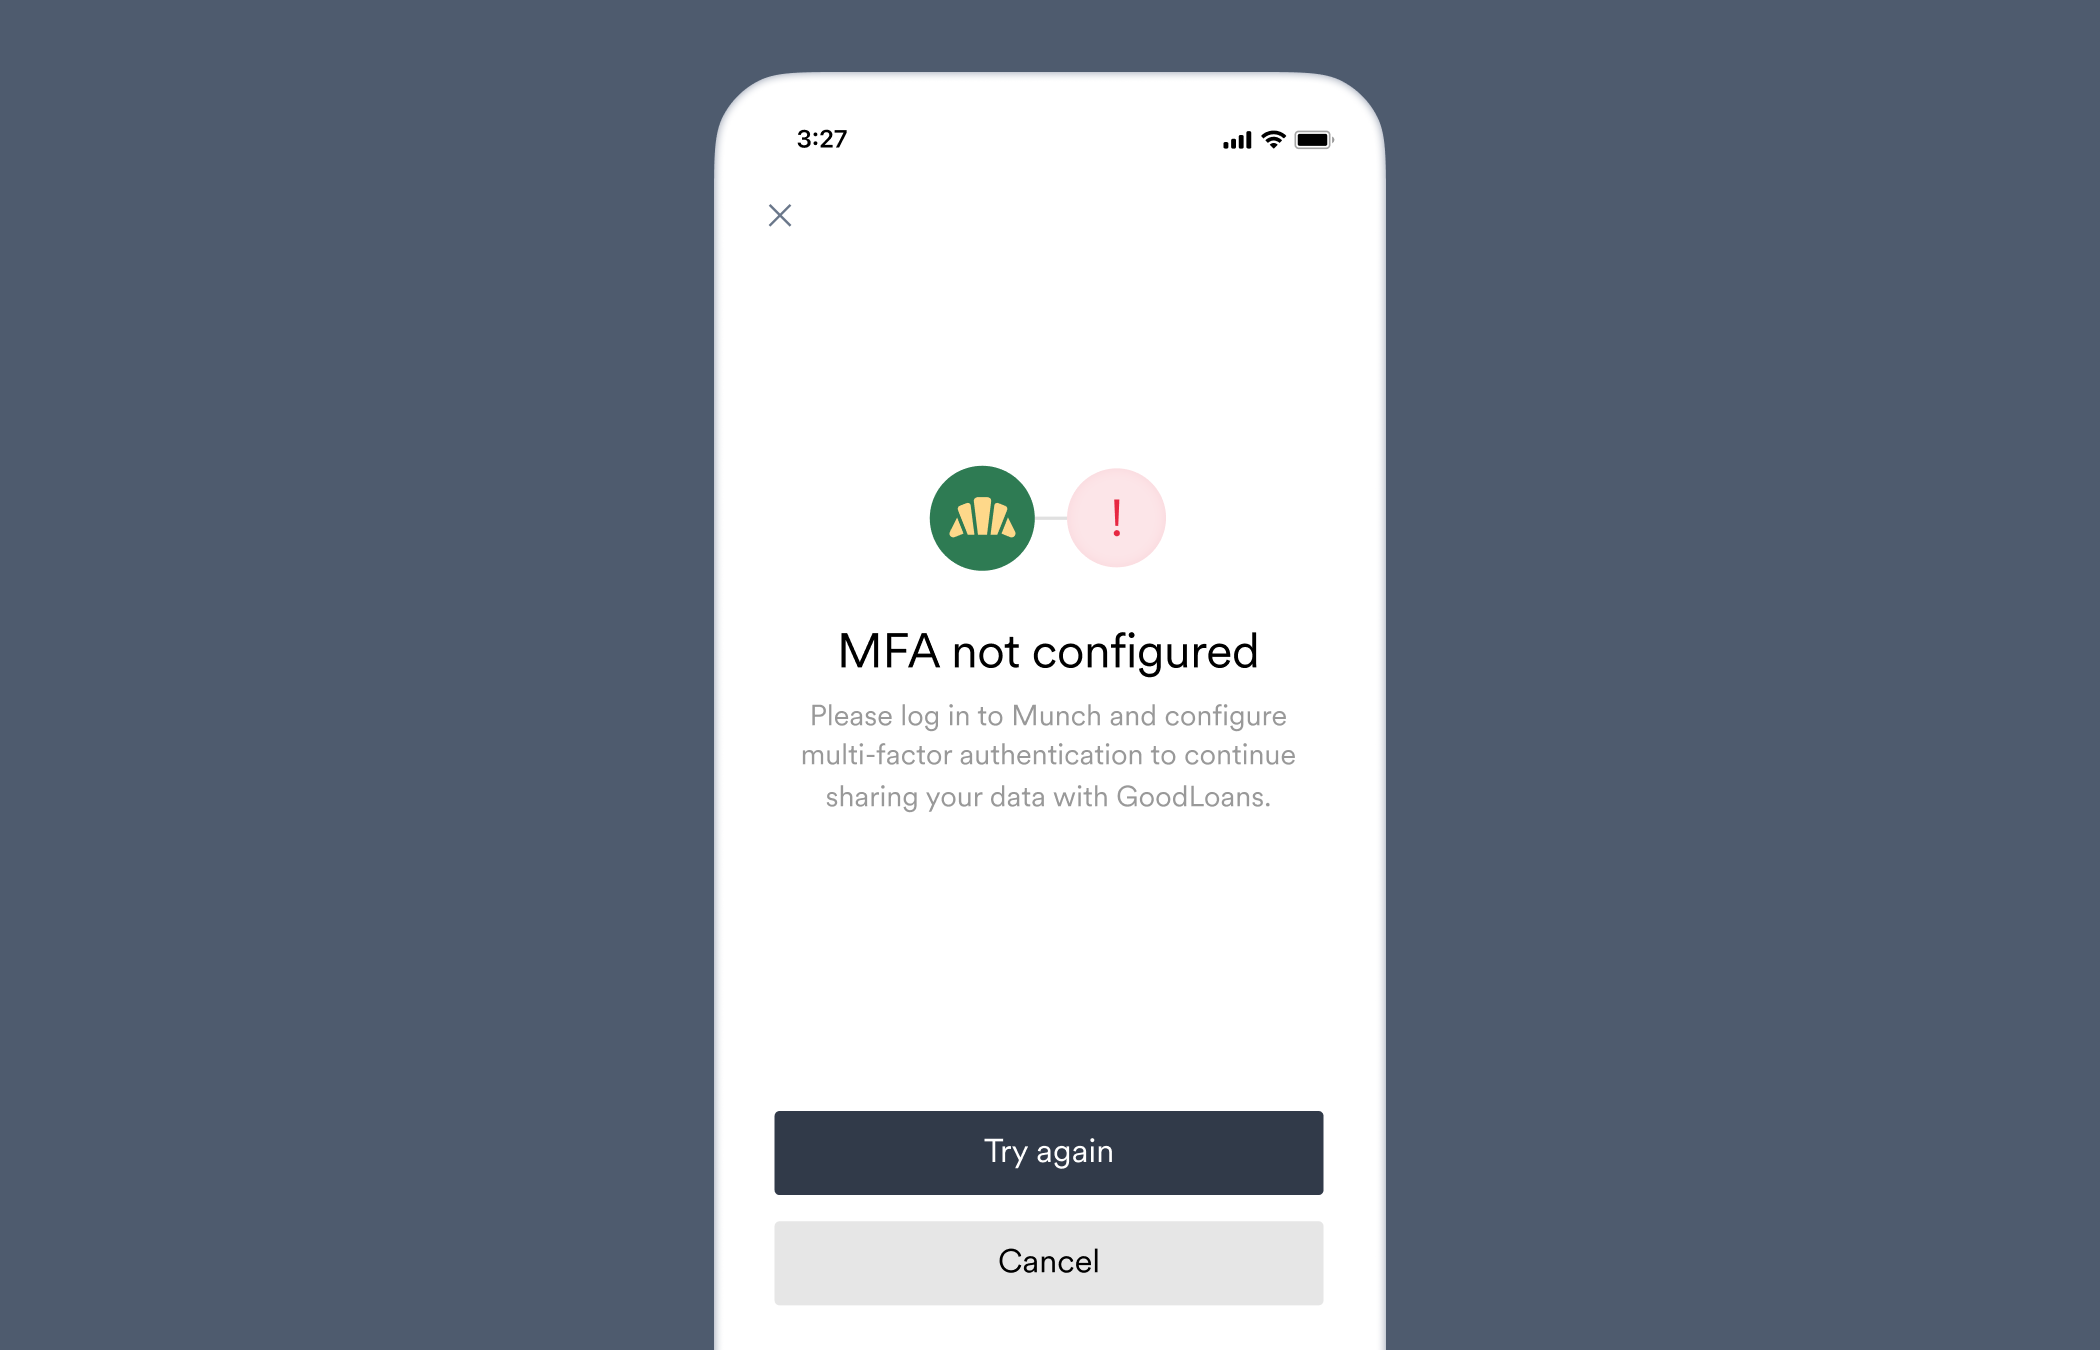 mfa_not_configured Account Connection error